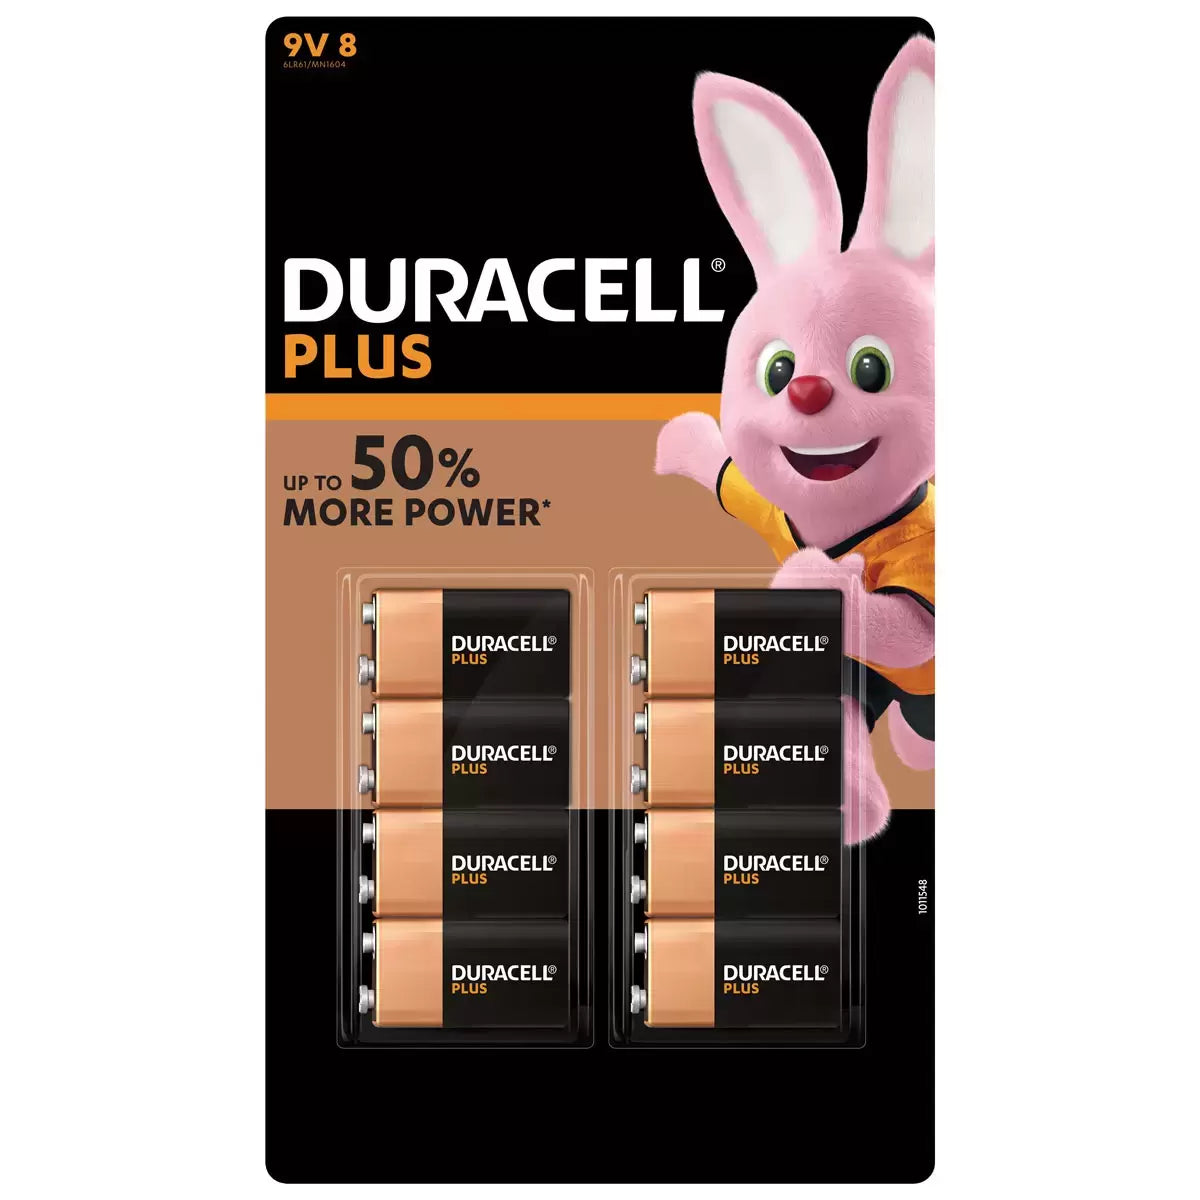 Duracell Plus 9v Battery - Pack of 8